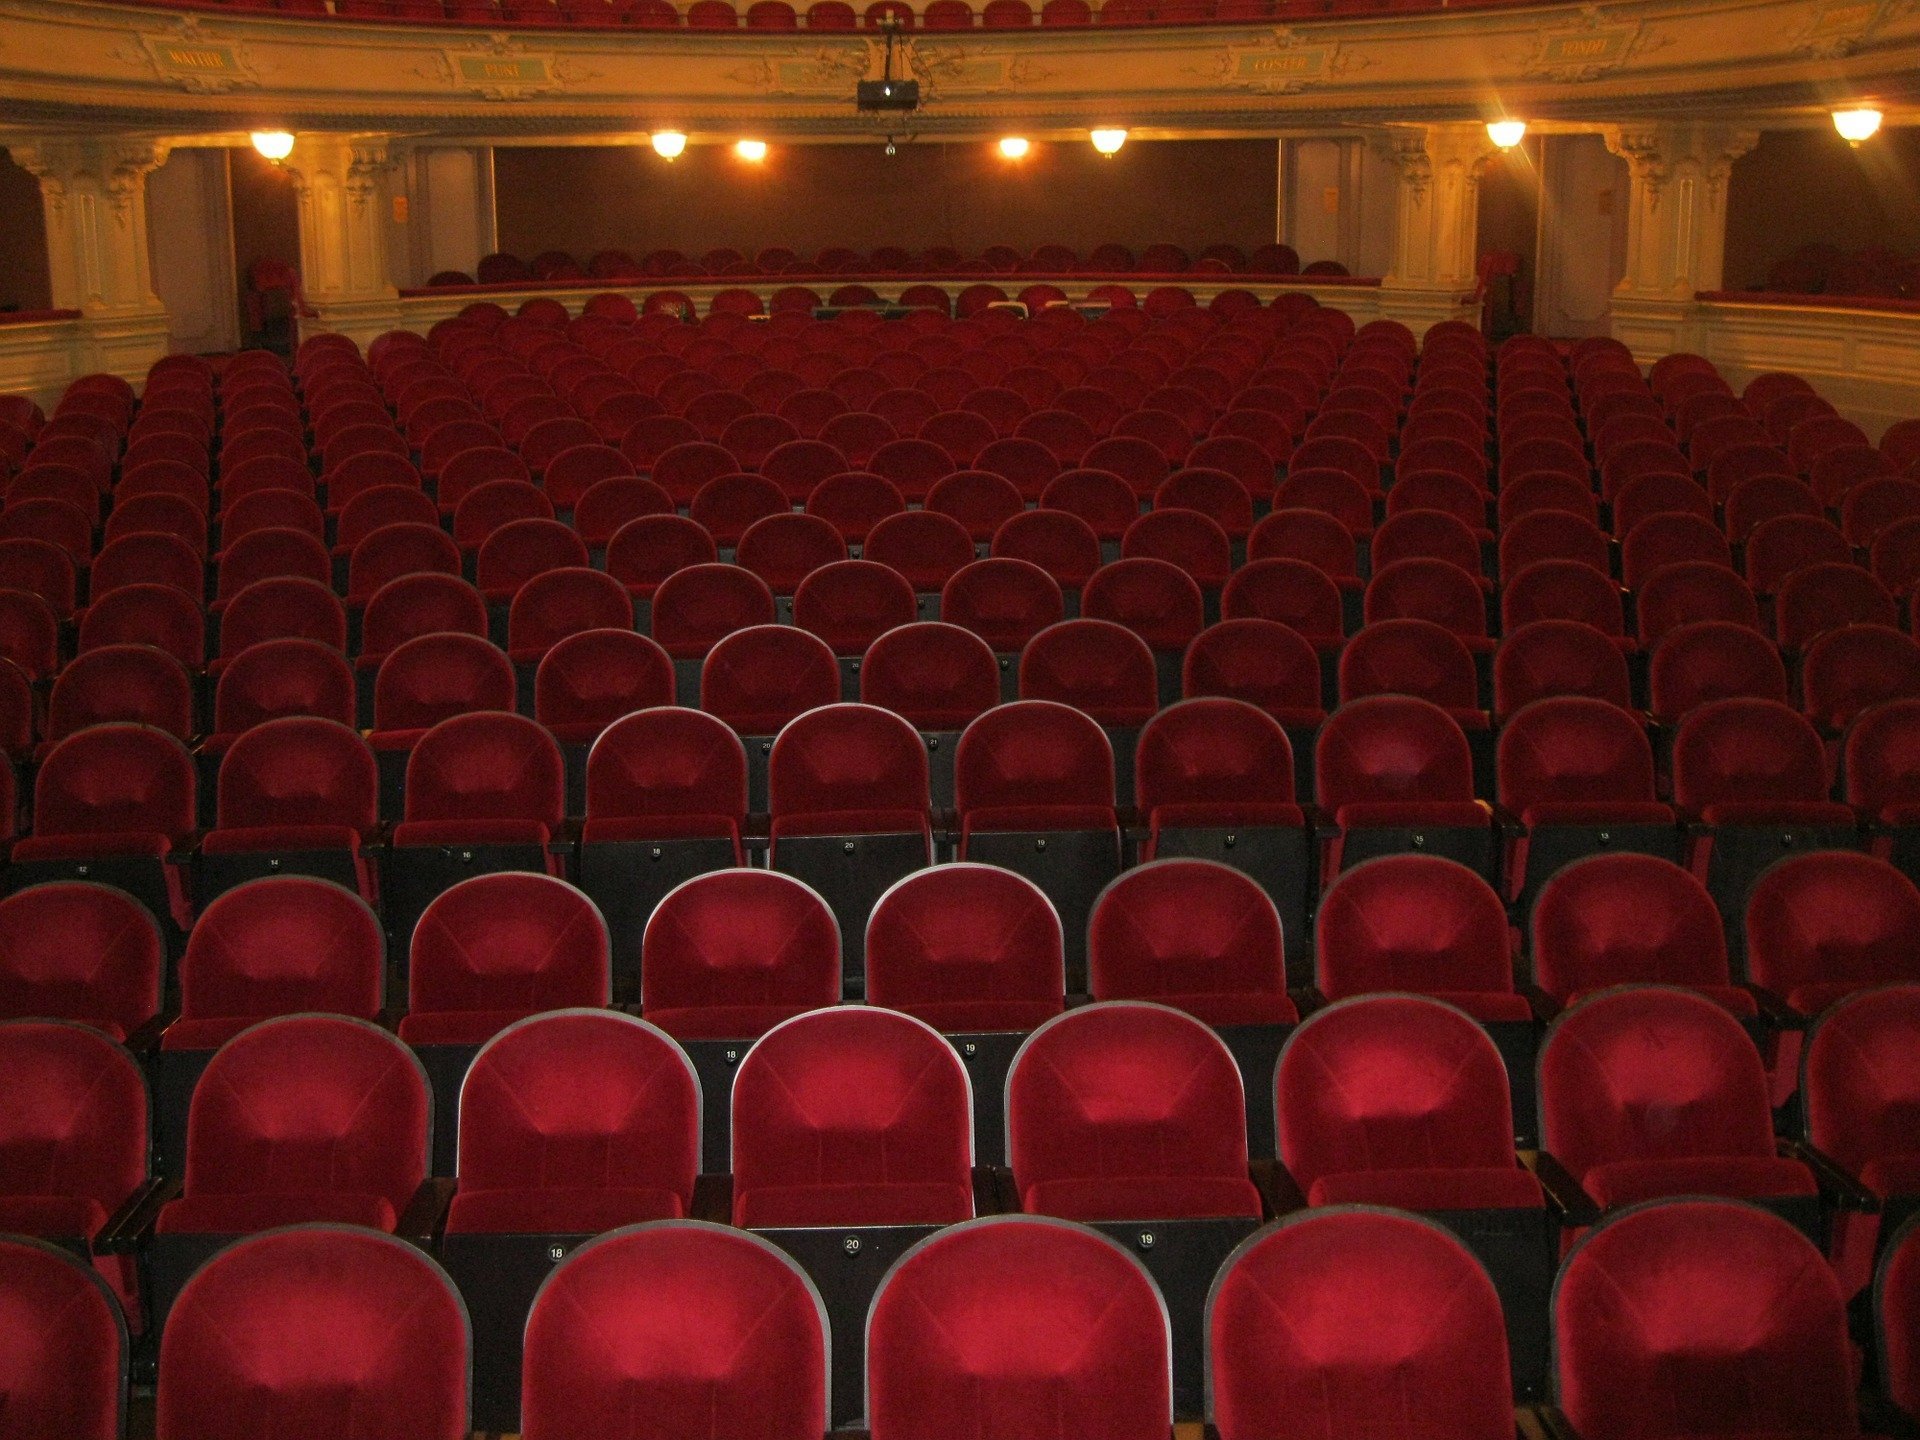 Theater seats. | Source: Pixabay